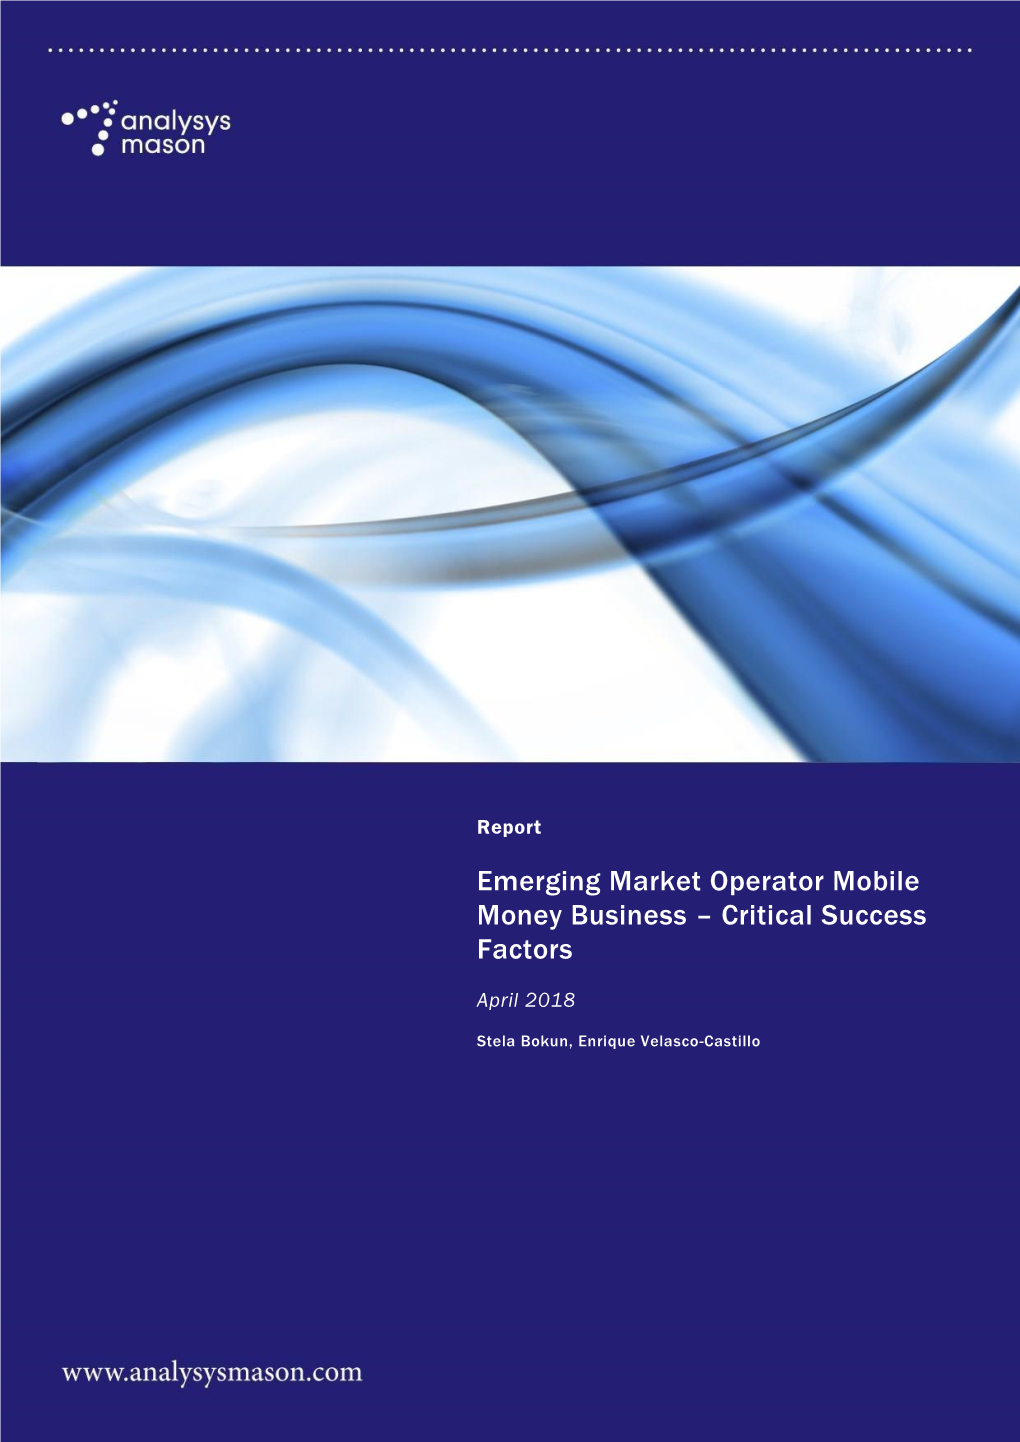 Emerging Market Operator Mobile Money Business – Critical Success Factors